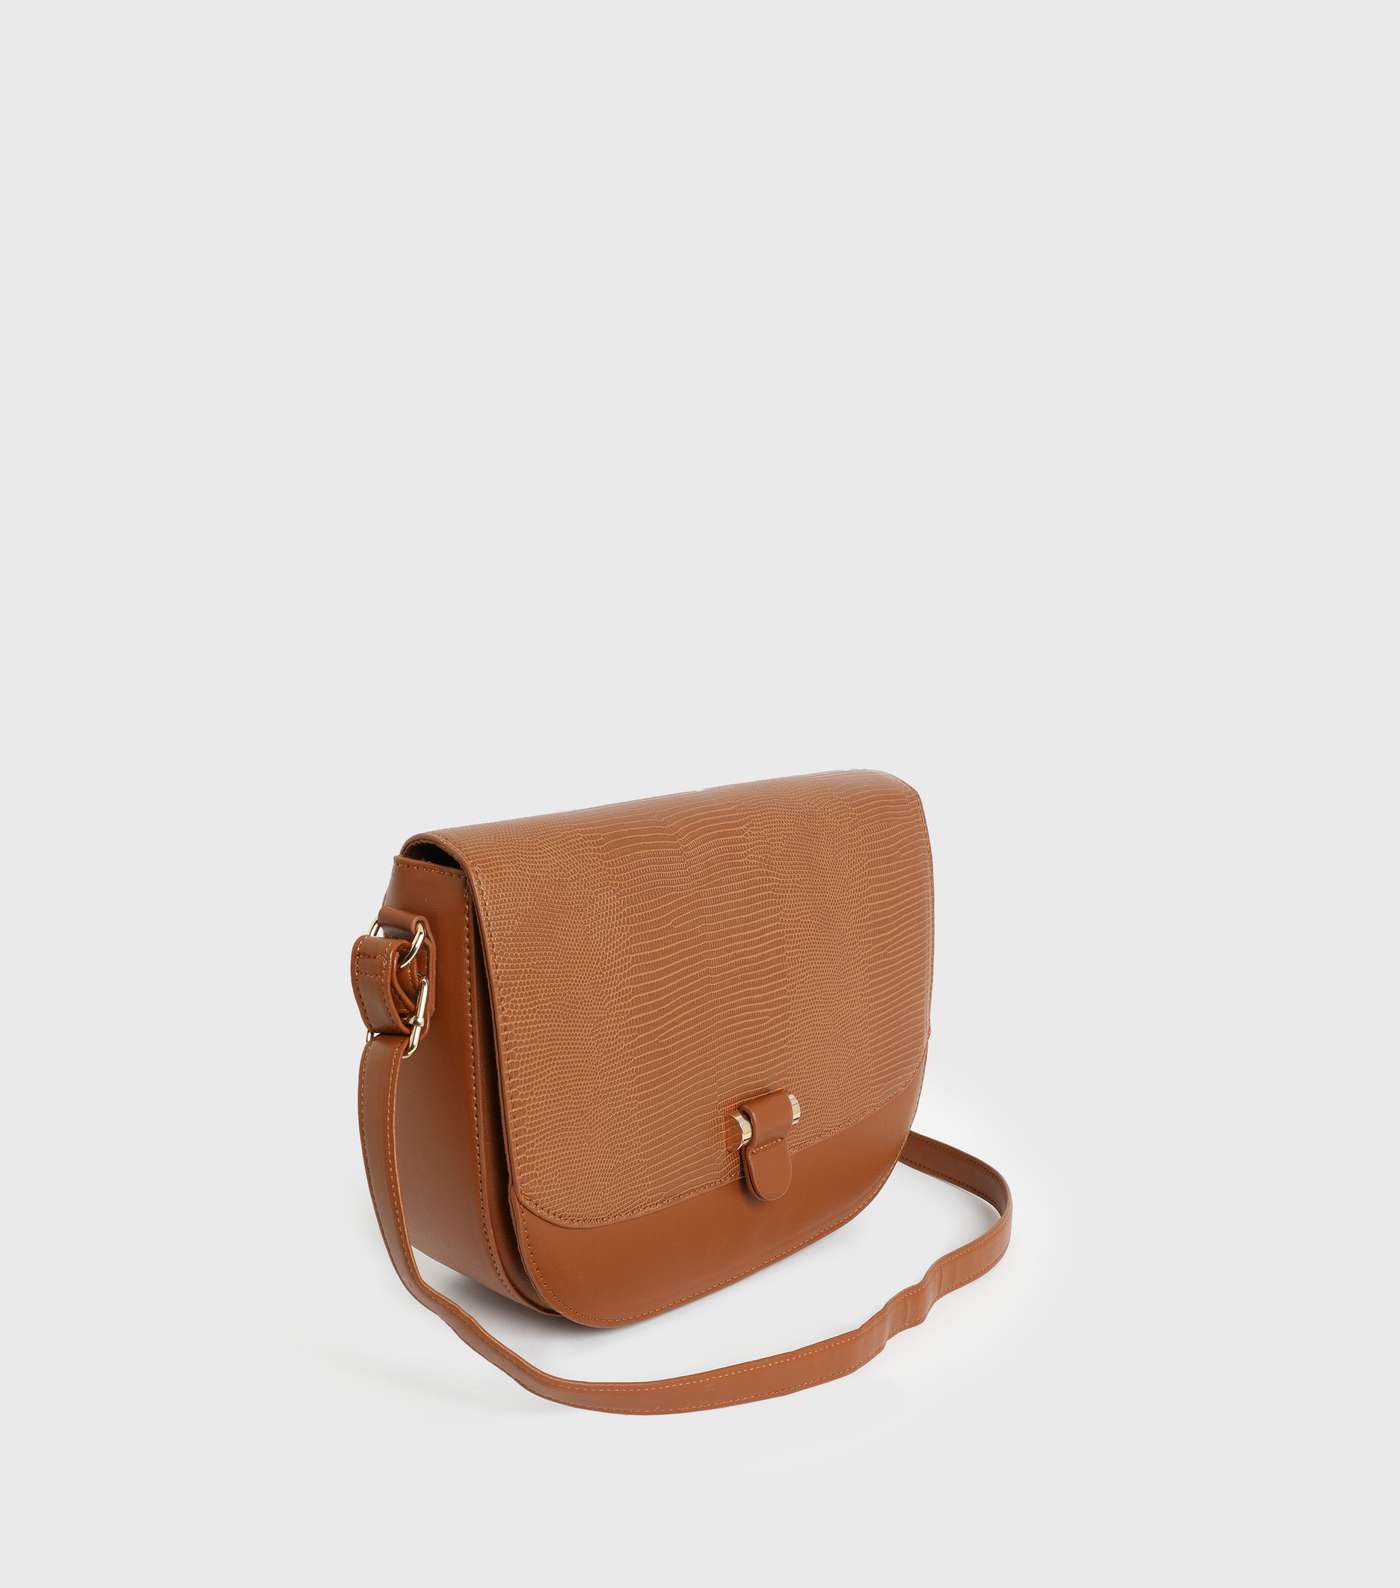 Rust Leather-Look Cross Body Saddle Bag Image 3